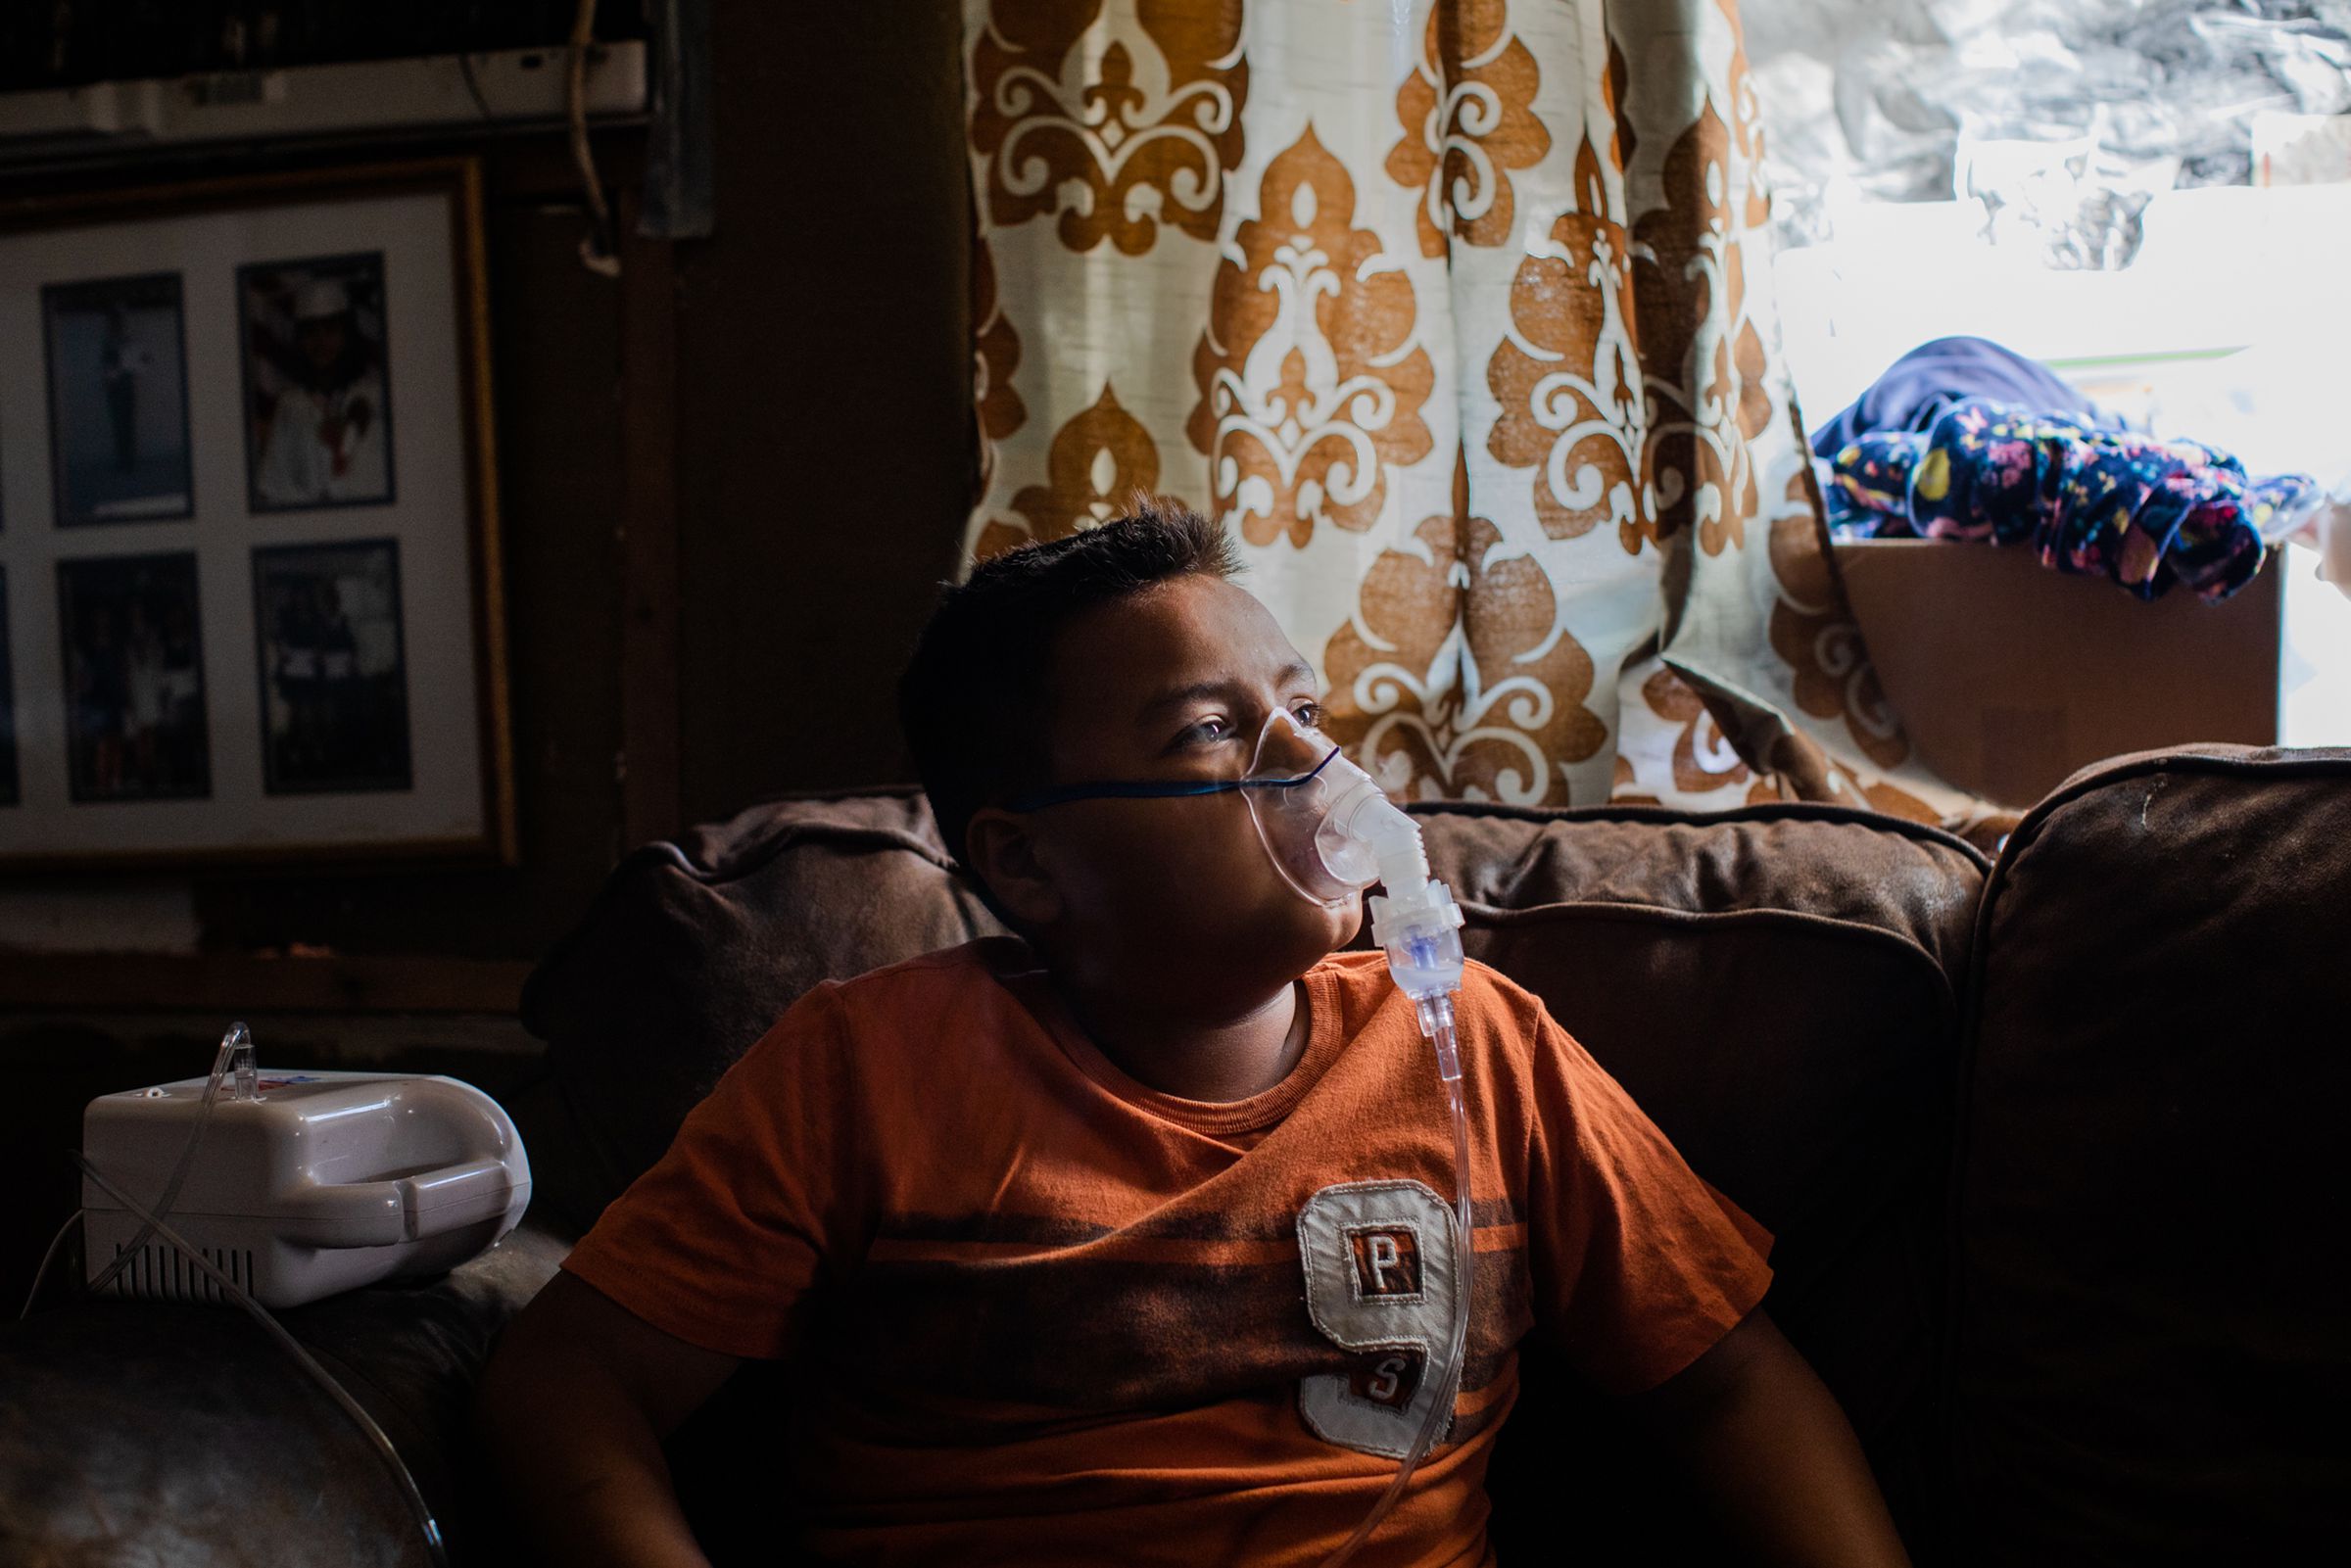 John Paul Castro takes his nebulizer treatment at his home in El Centro, California.